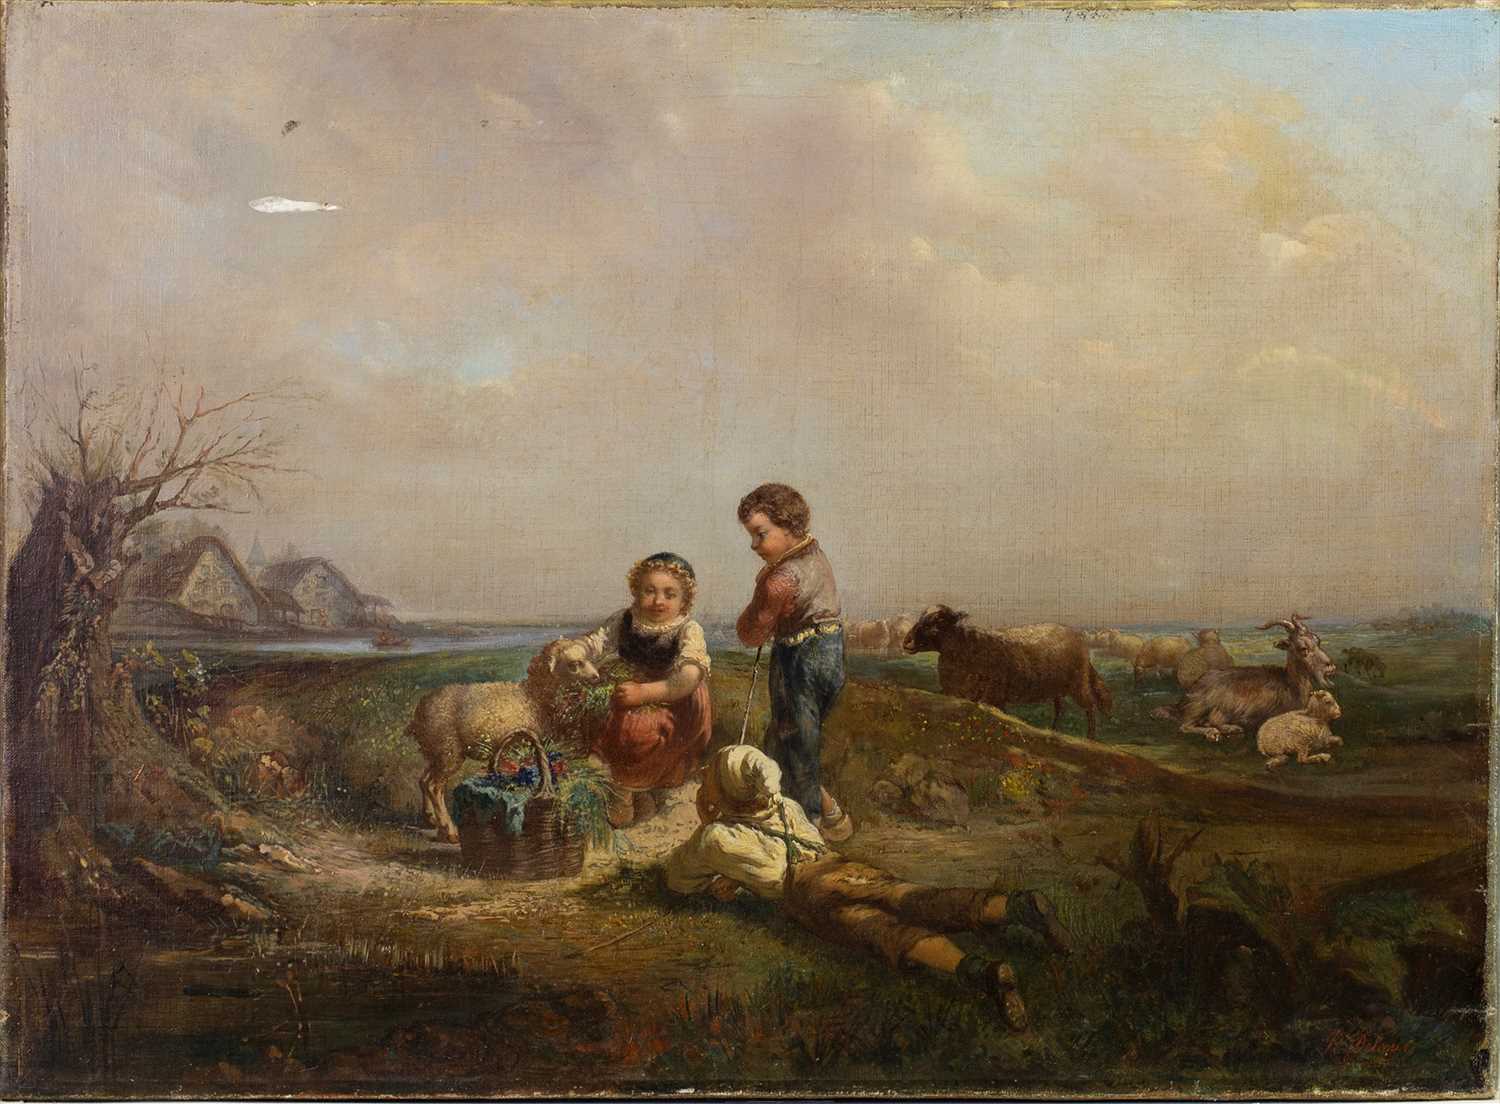 Lot 24 - CHILDREN IN A RURAL SETTING, AN OIL